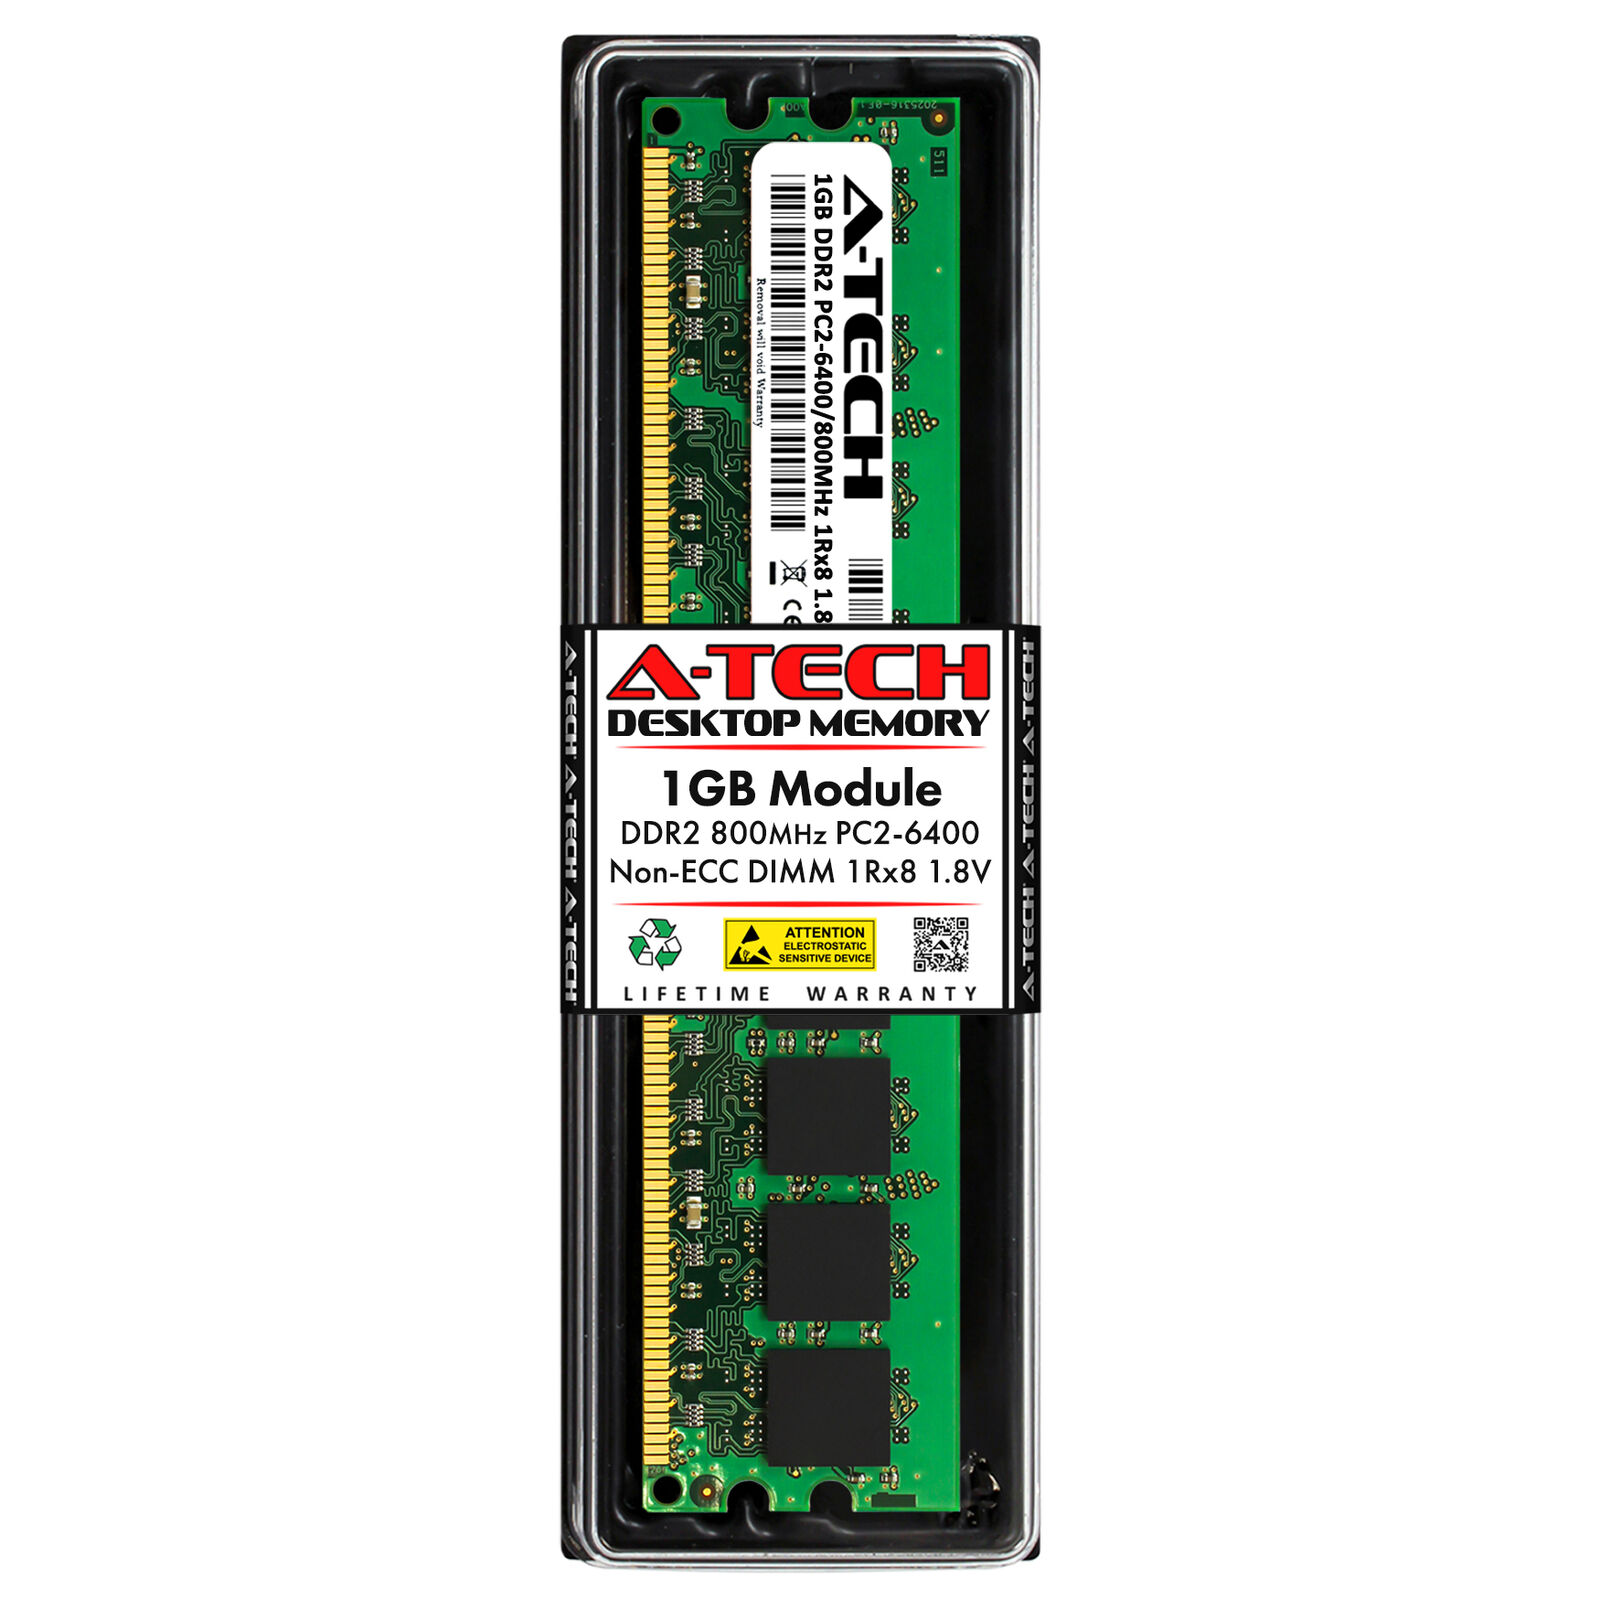 1GB DDR2-800 DIMM Micron MT8HTF12864AY-800J1 Equivalent Desktop Memory RAM